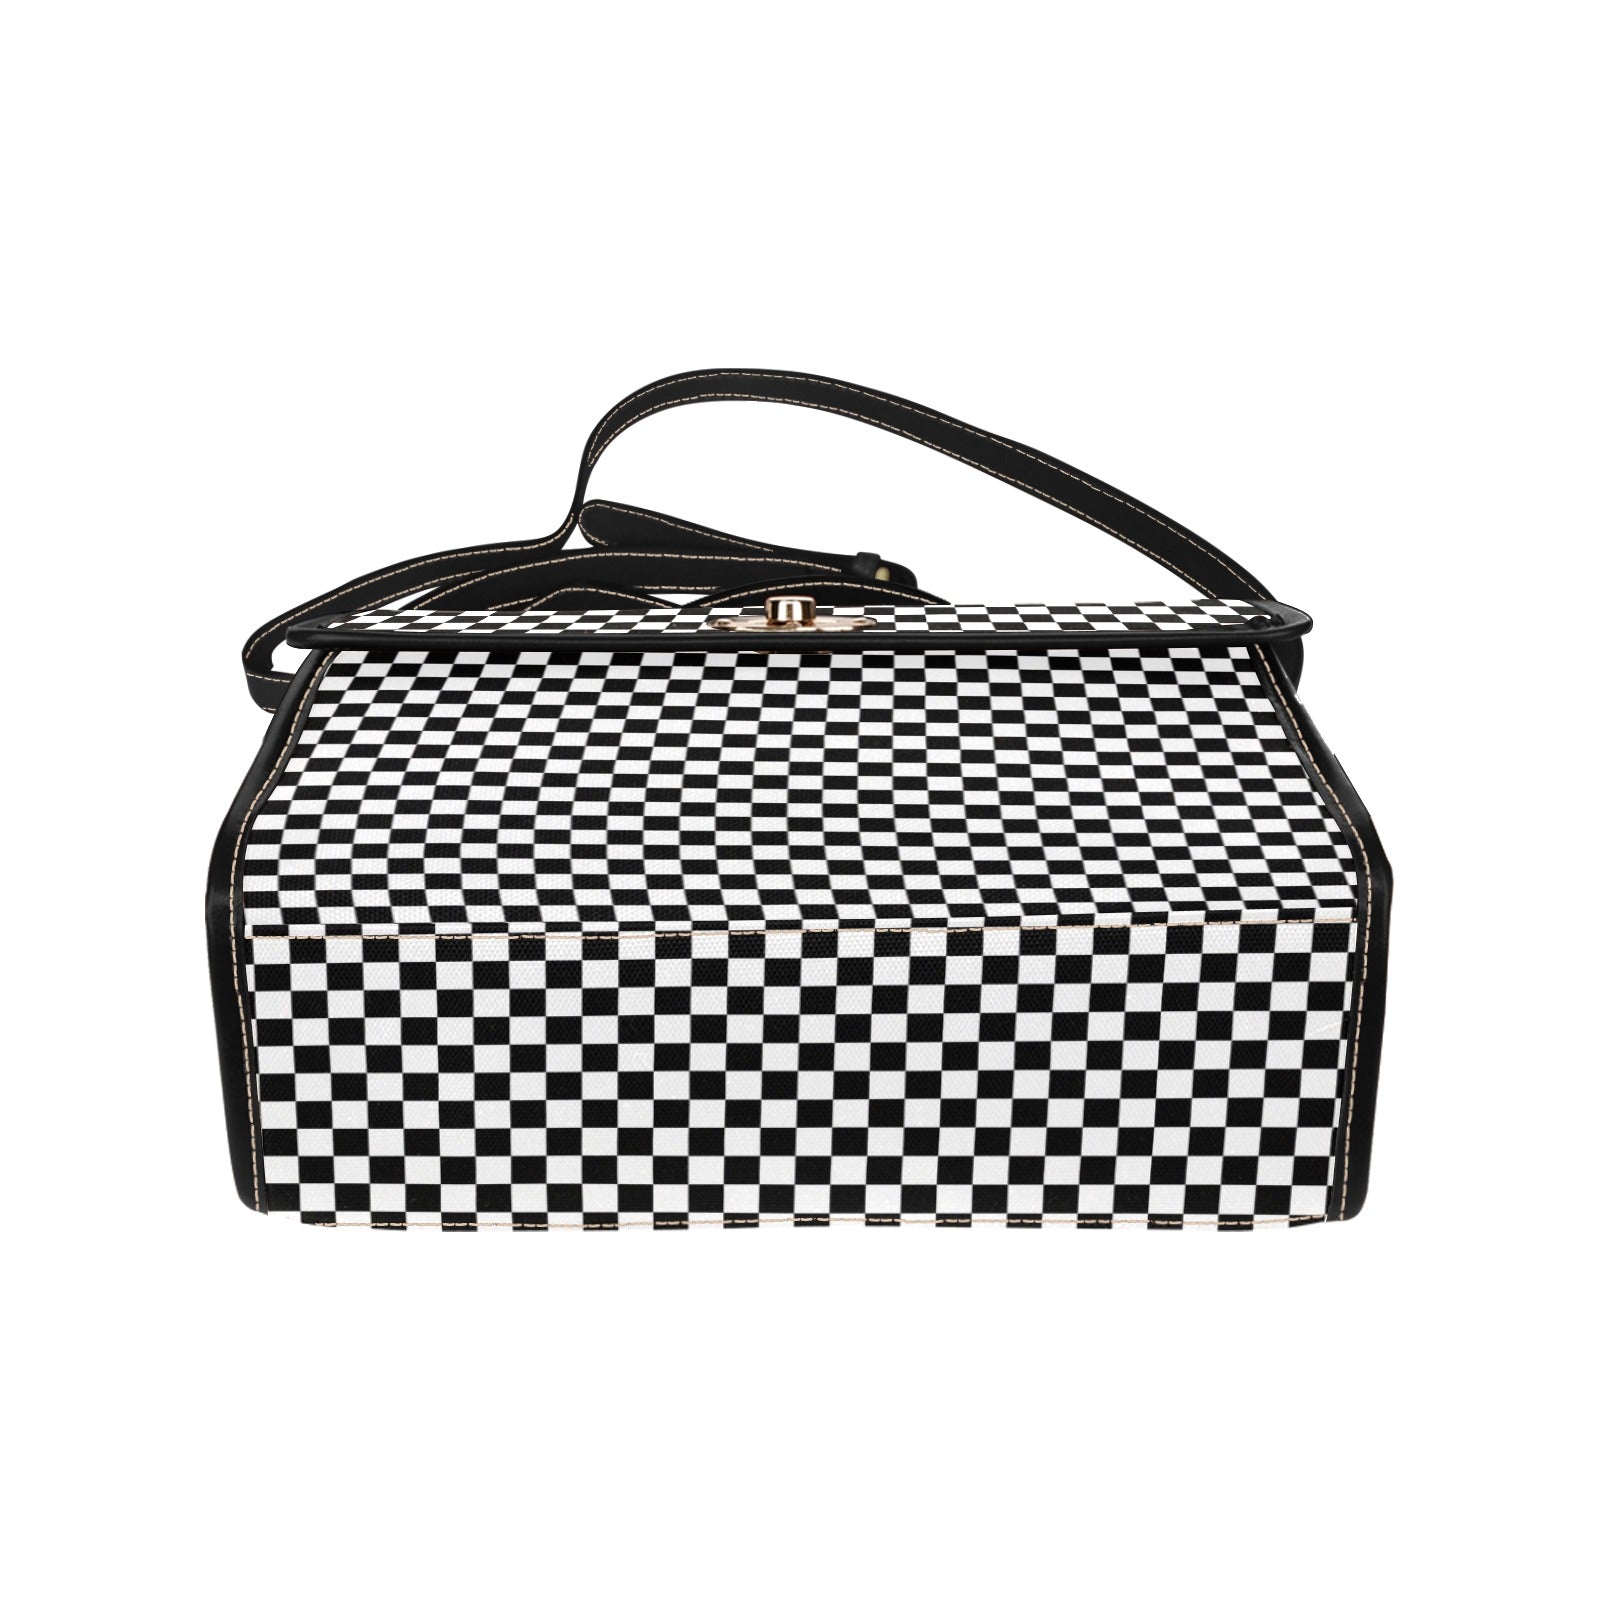 Checkered Satchel Purse bag, Black White Check Checkerboard Small Waterproof Cute Women Crossed Body Vegan Leather Strap Handbag Starcove Fashion